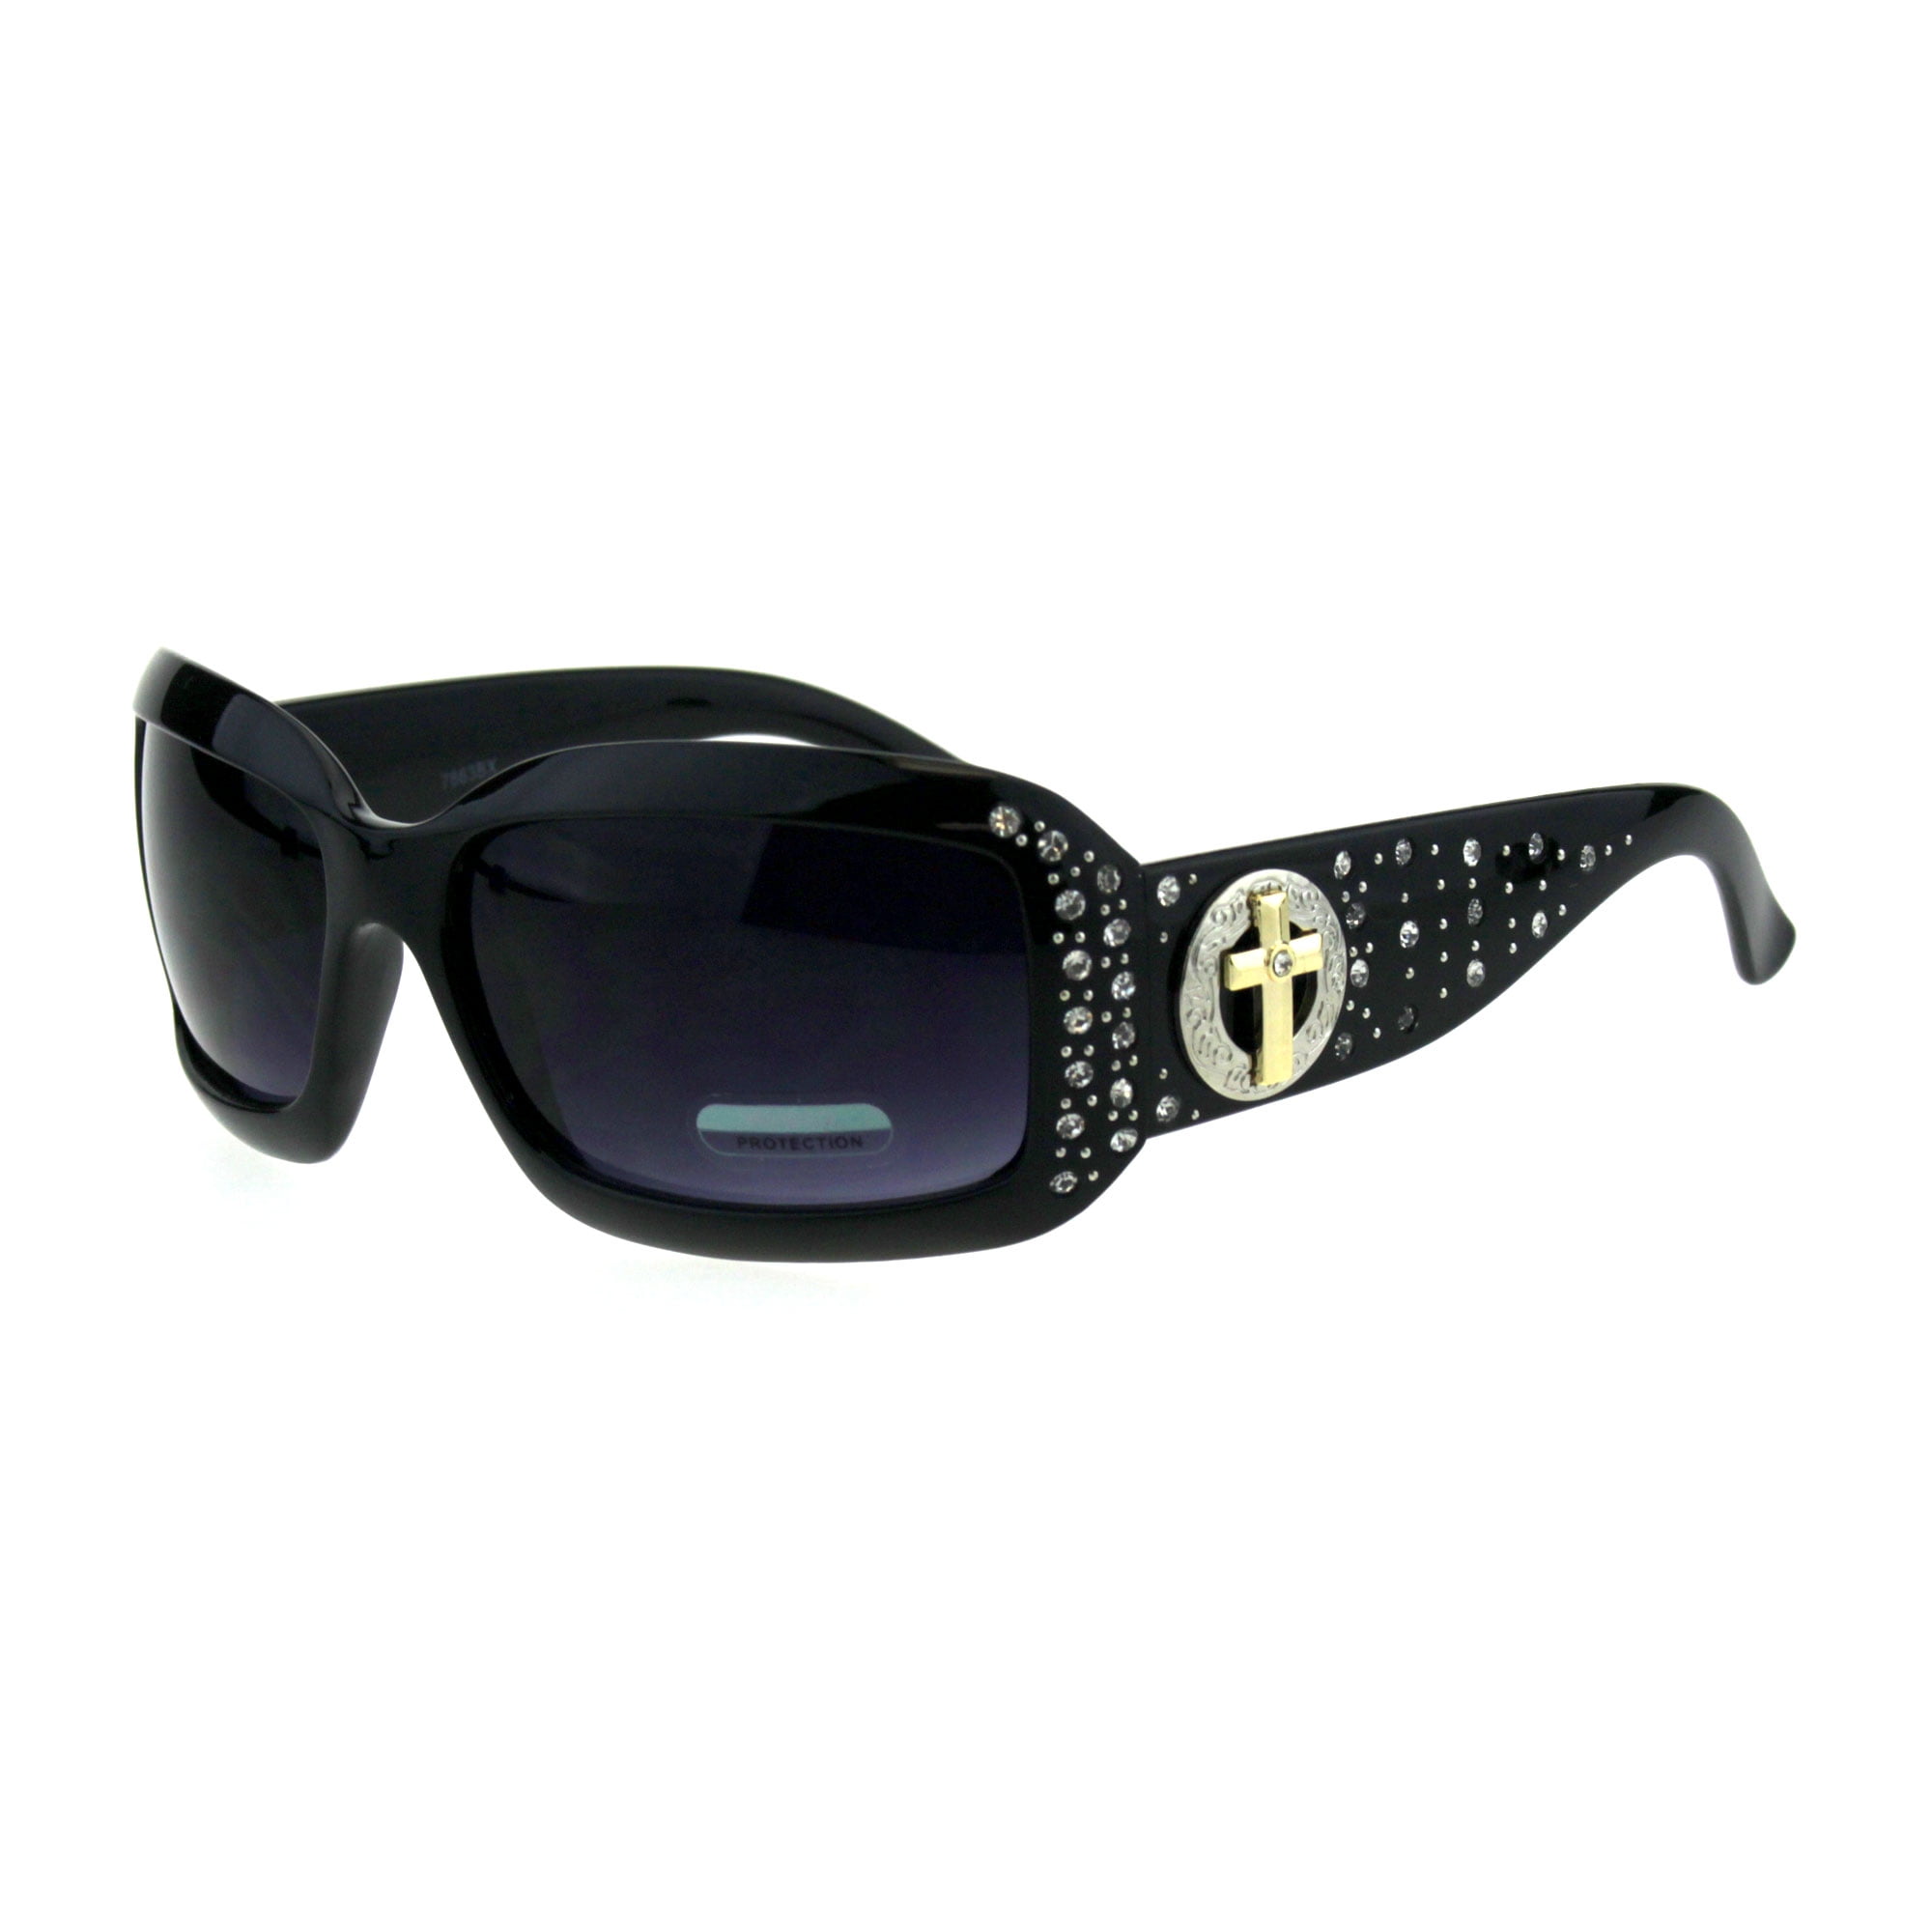 Crossed Rhinestone Sunglasses - White - Walmart.com